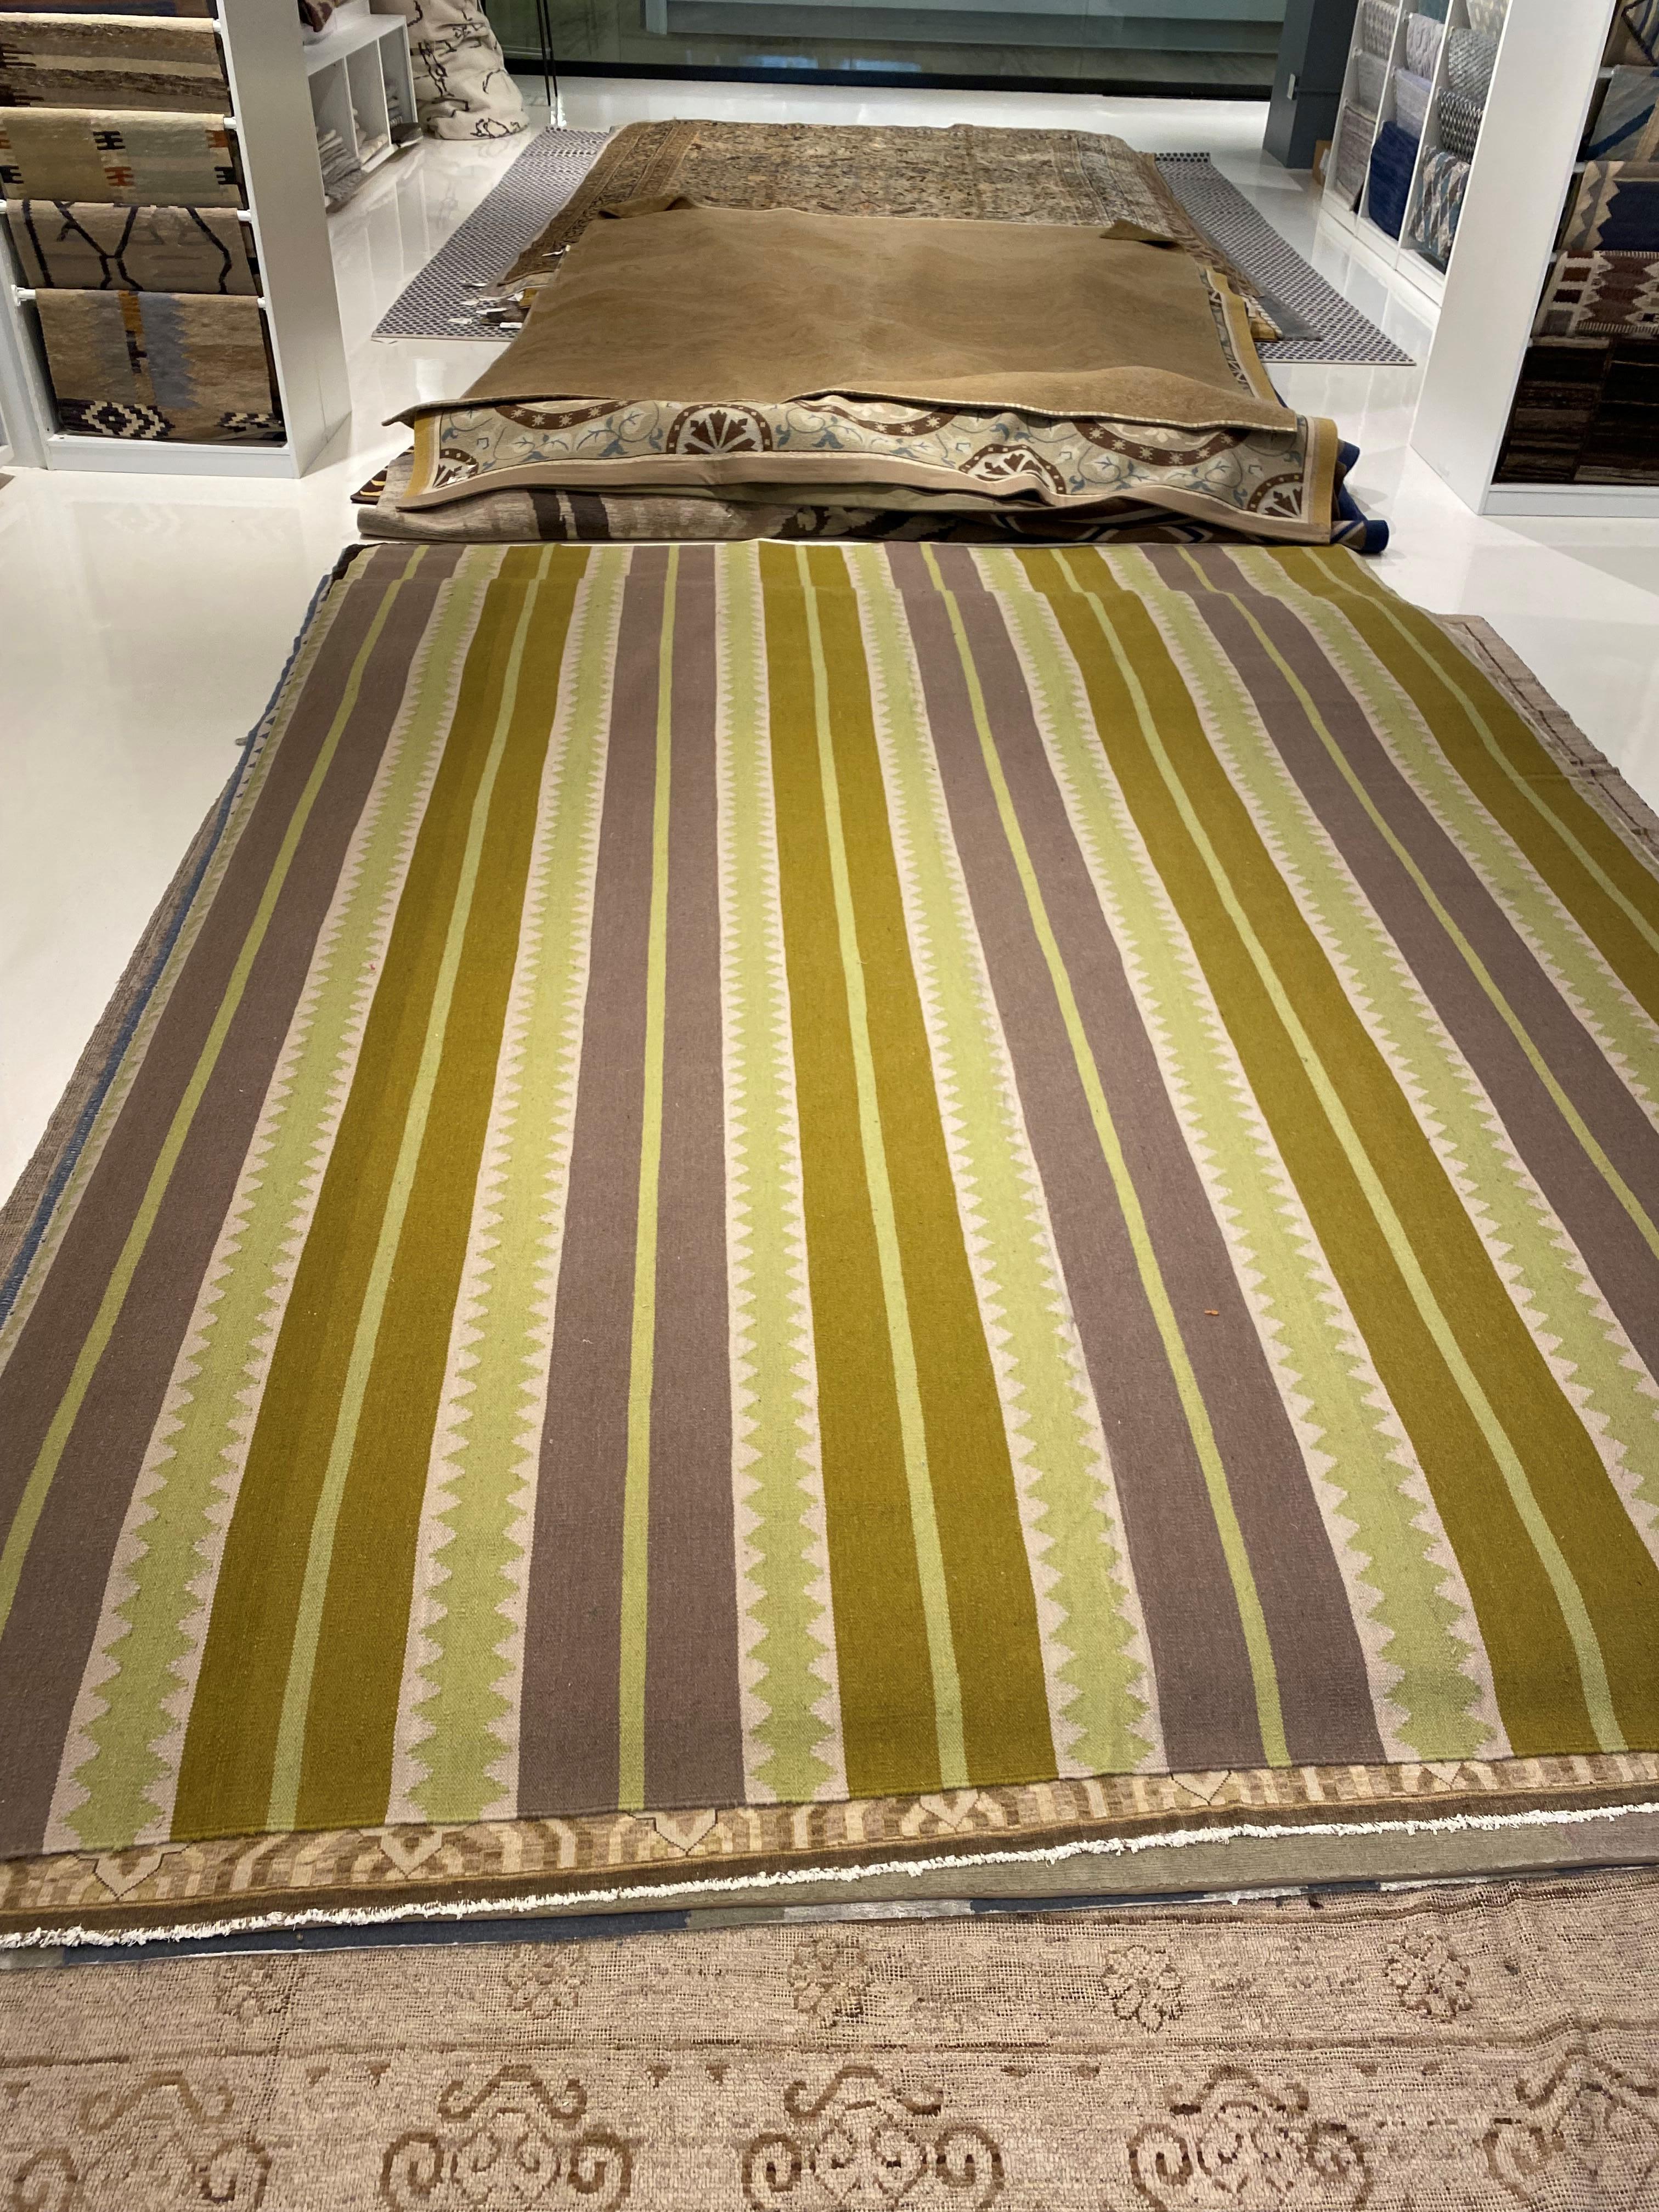 Modern striped Sundance green handmade wool rug by Doris Leslie Blau.
Size: 9'2